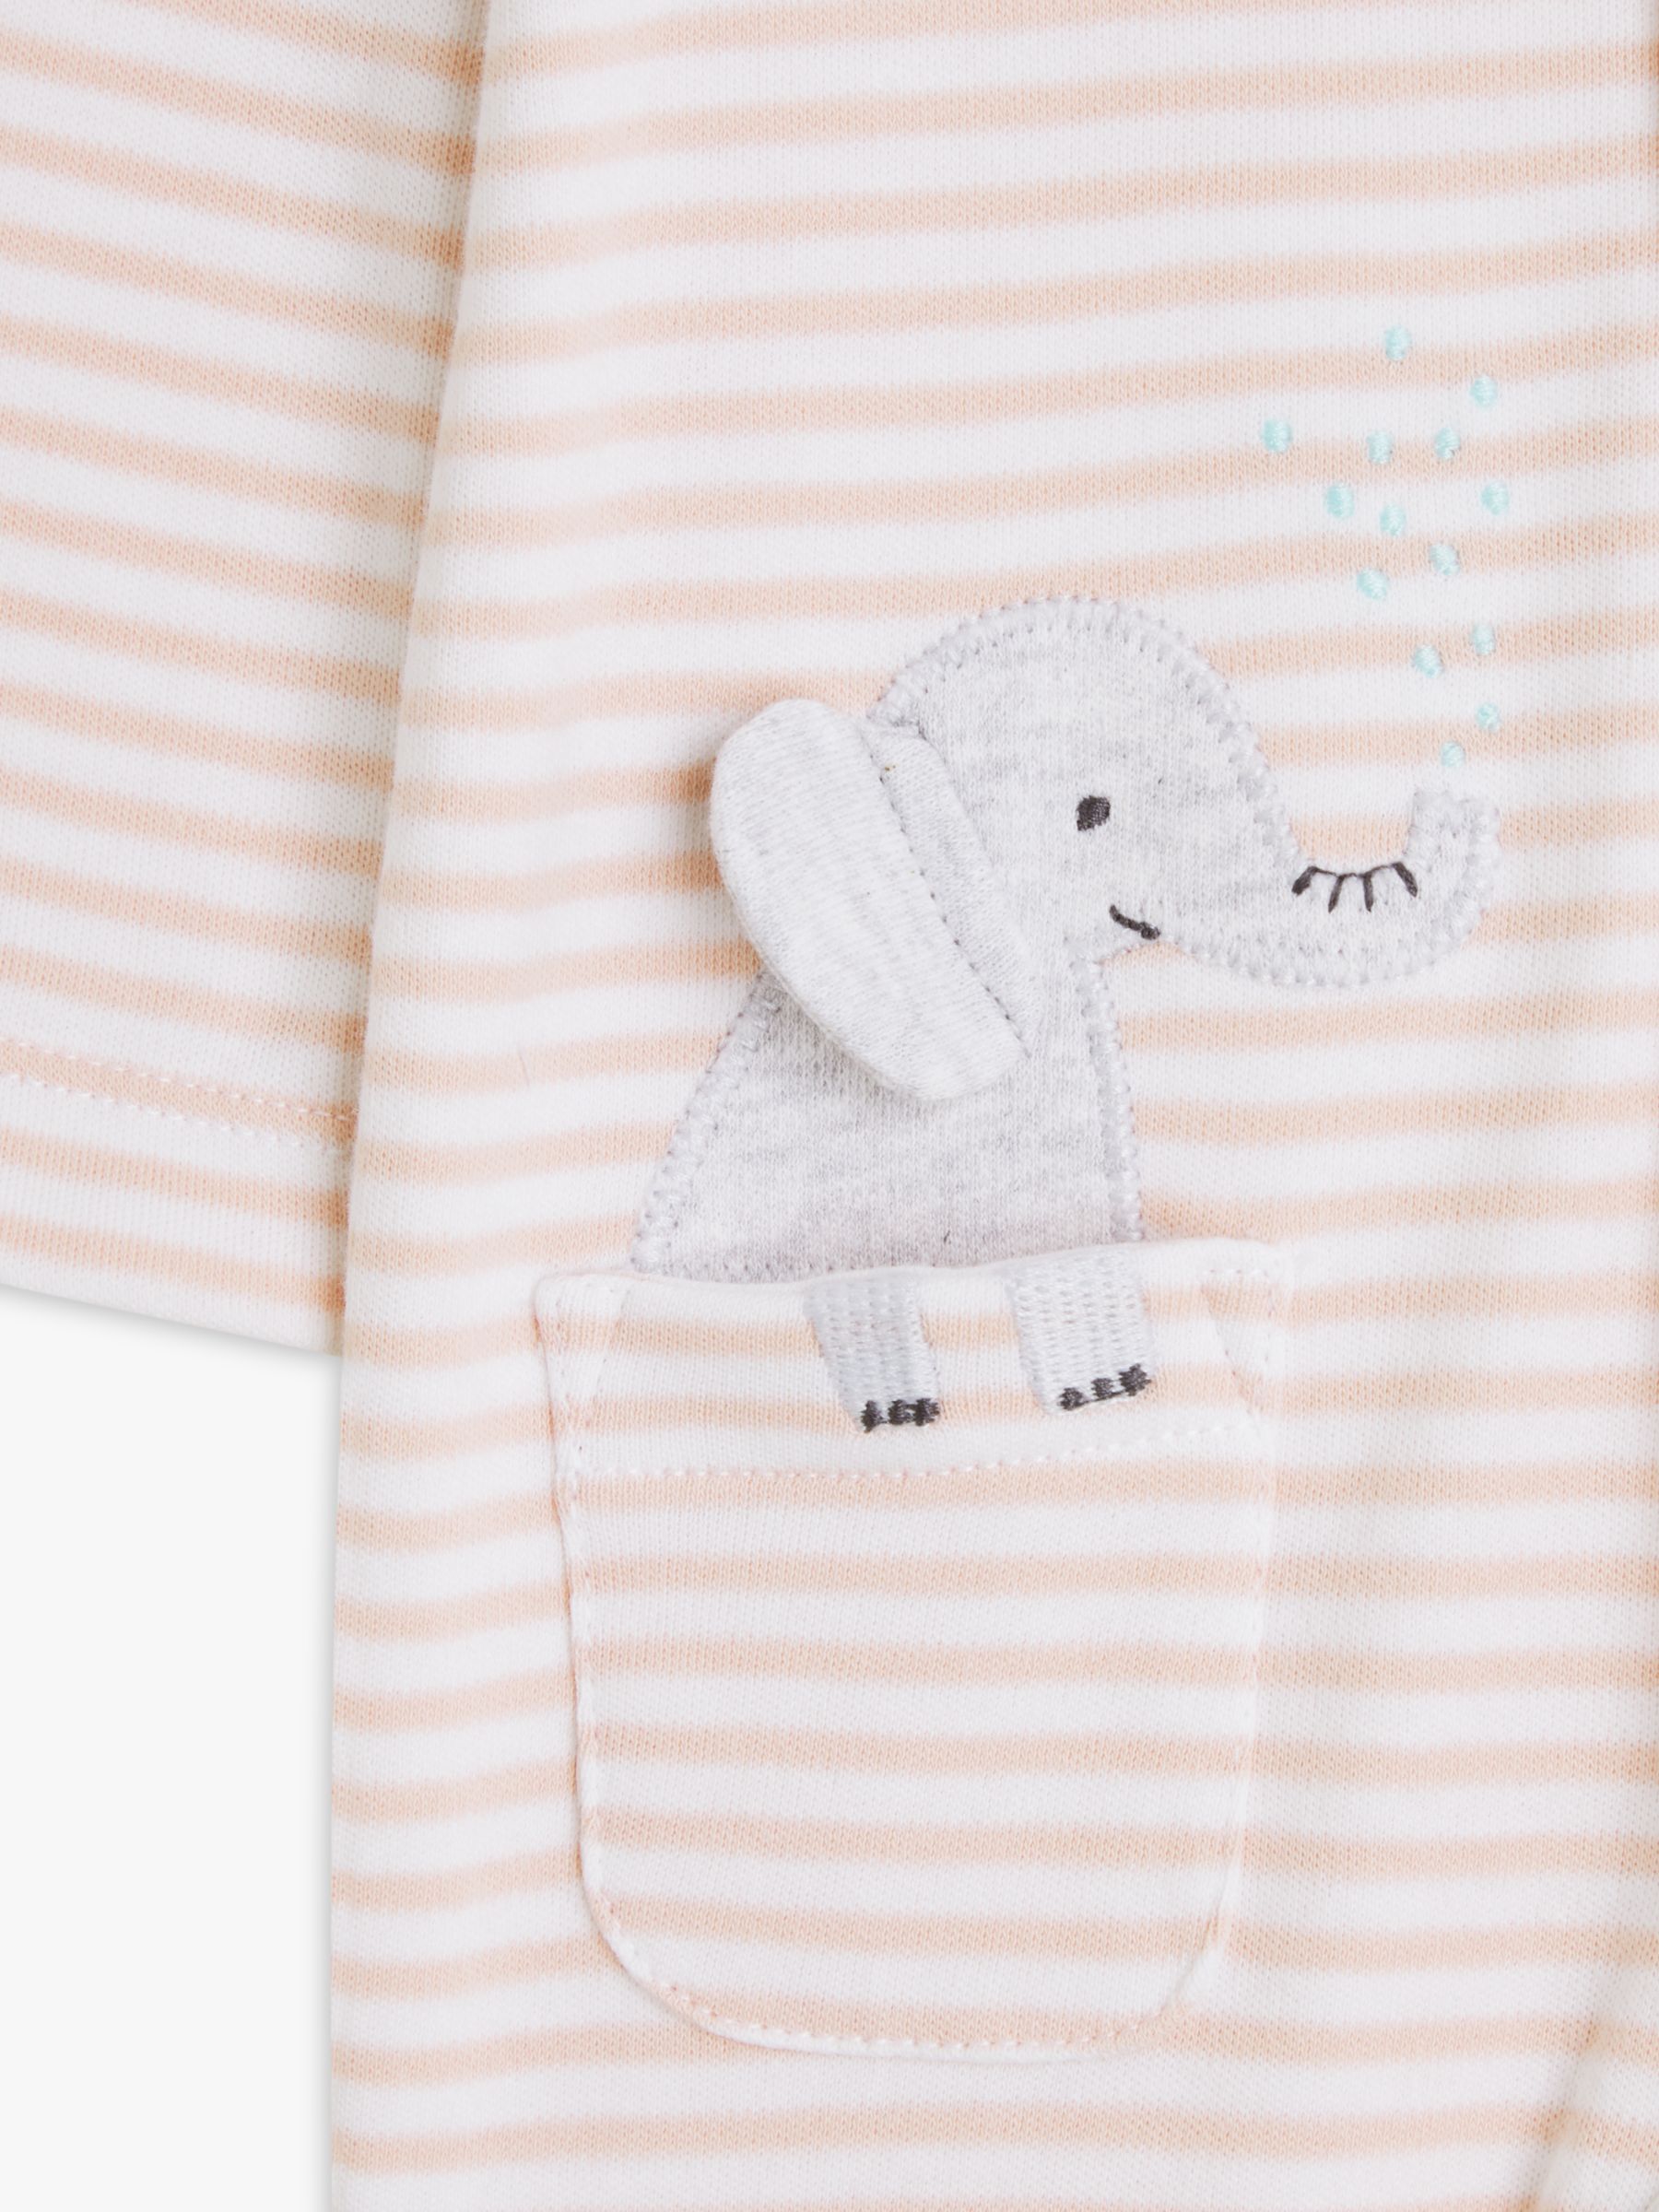 John Lewis Baby Elephant Stripe Bodysuit, Pink/Multi, Tiny Baby